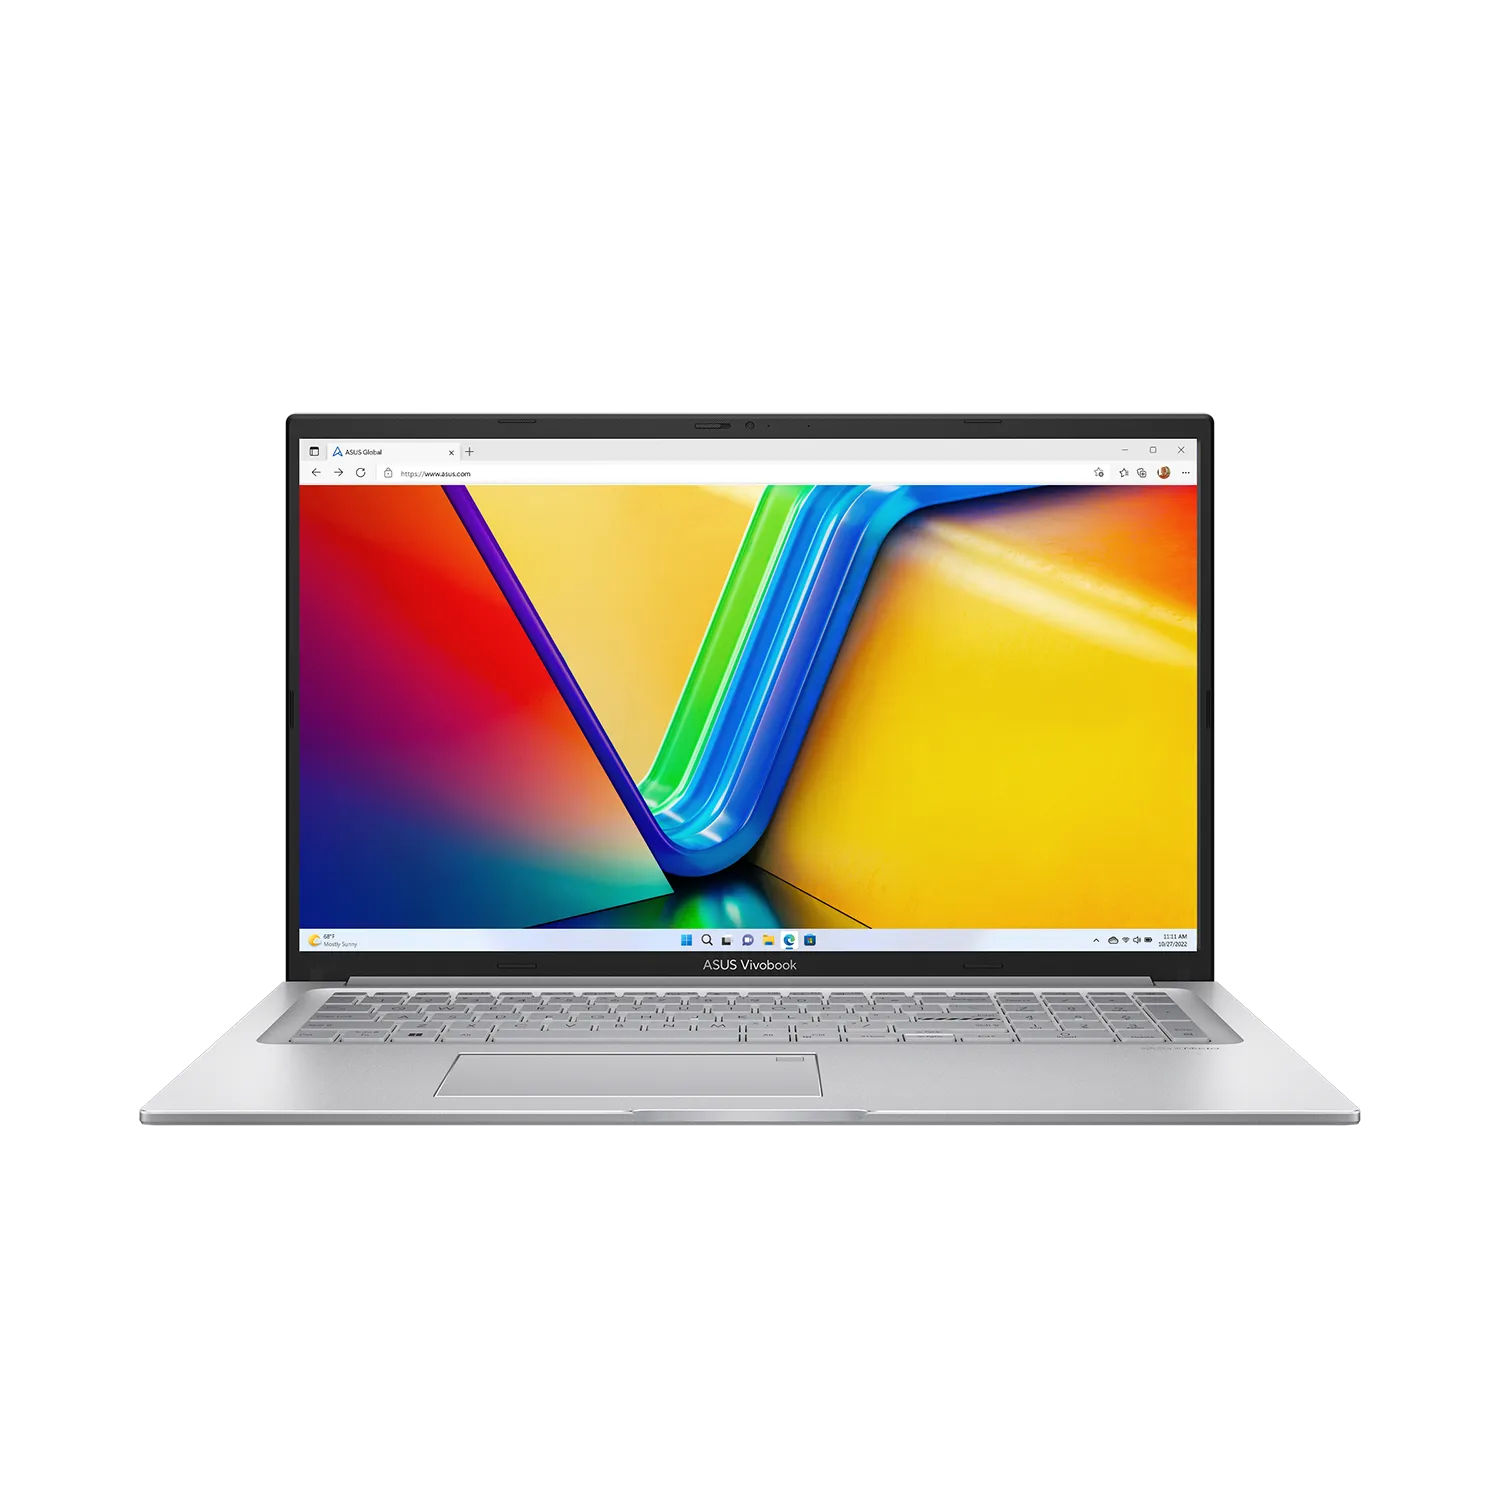 Display, 12 17,3 RAM, , GB Silber Vivobook 4000 Notebook installiert Office Pro, M-Serie 2021 und aktiviert, mit fertig GB ASUS SSD, Zoll